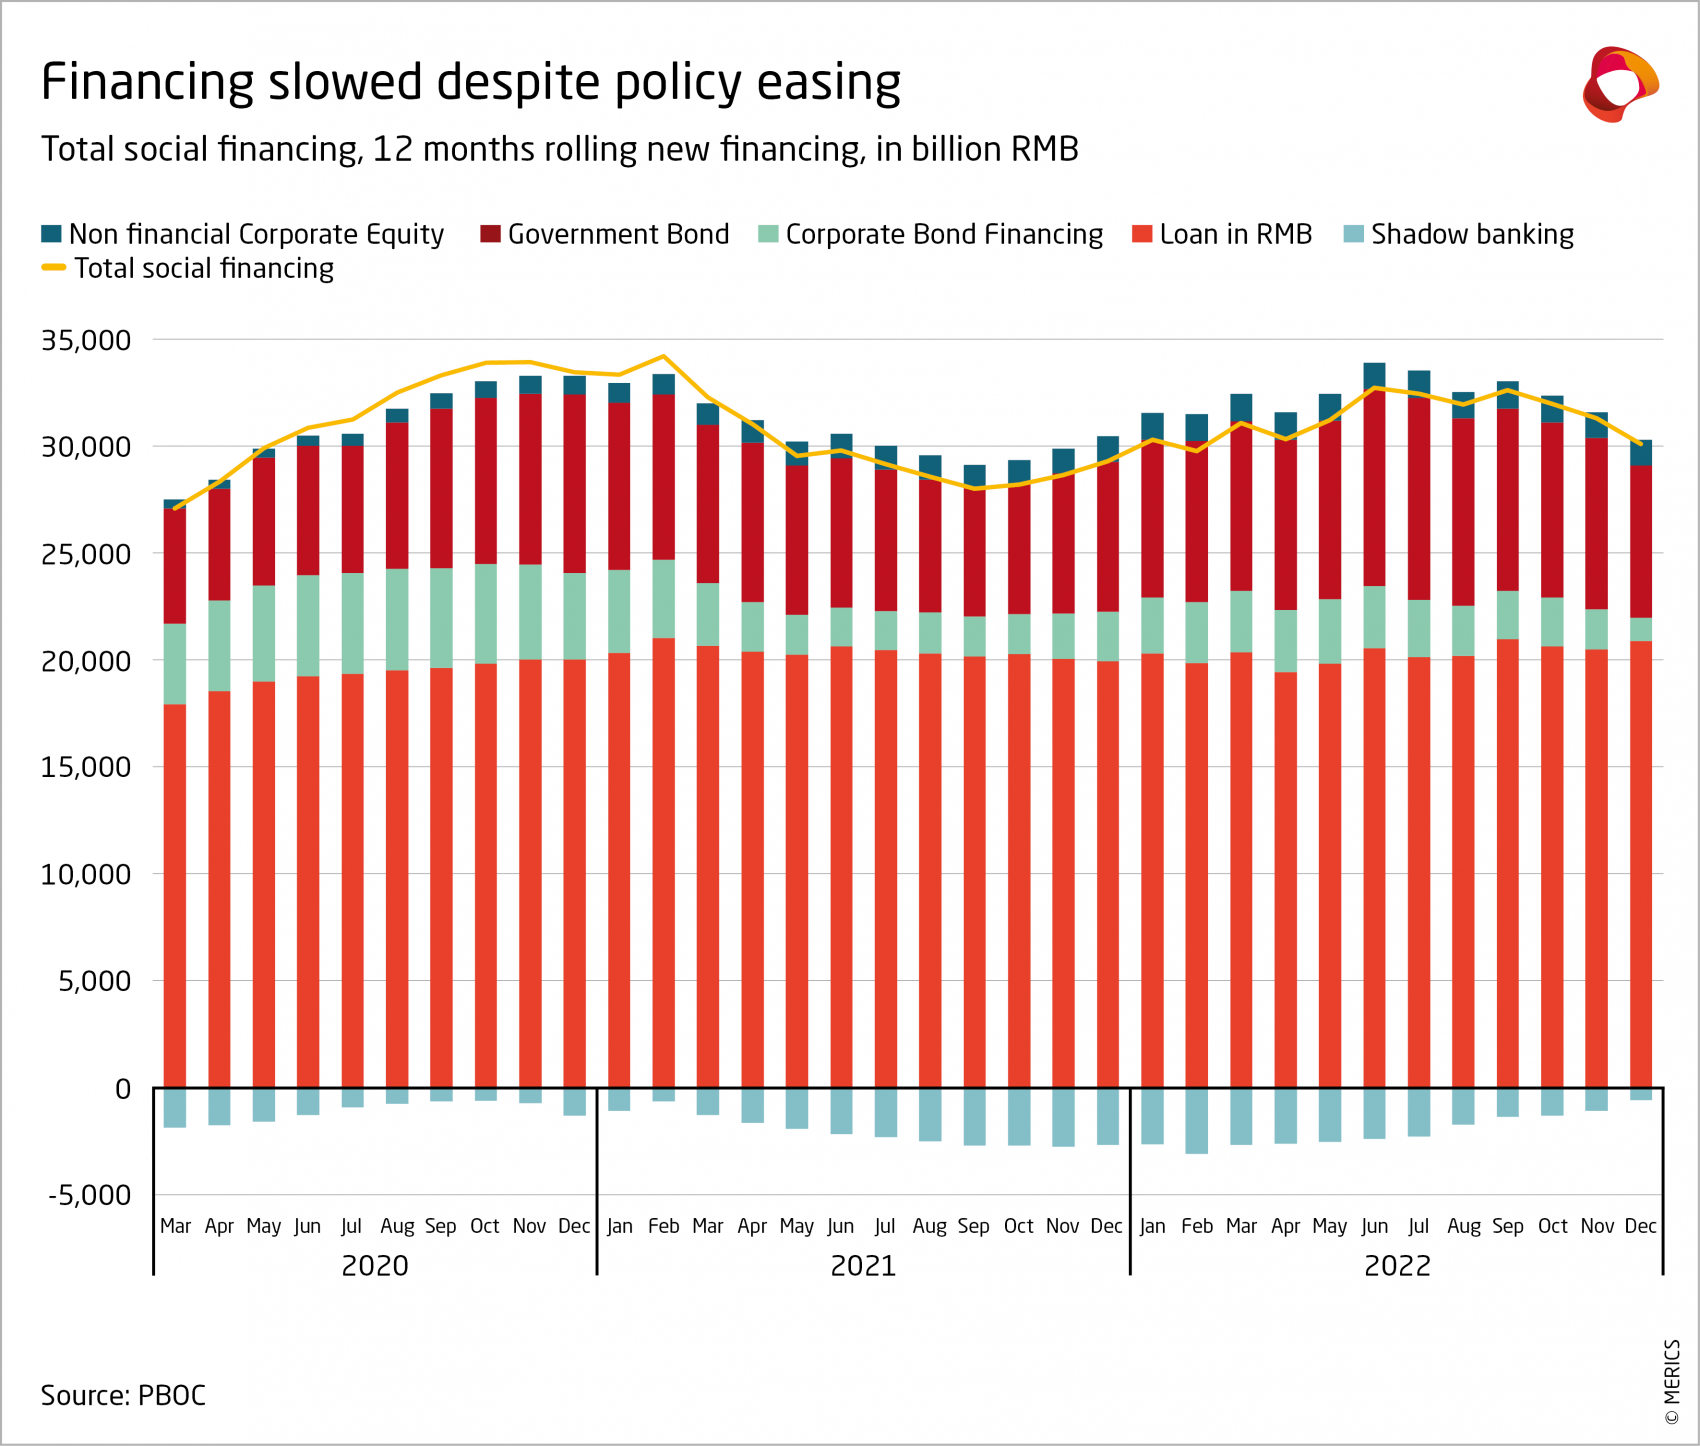 Economic Indicators Q4-22: Exhibit 8, financing slowed